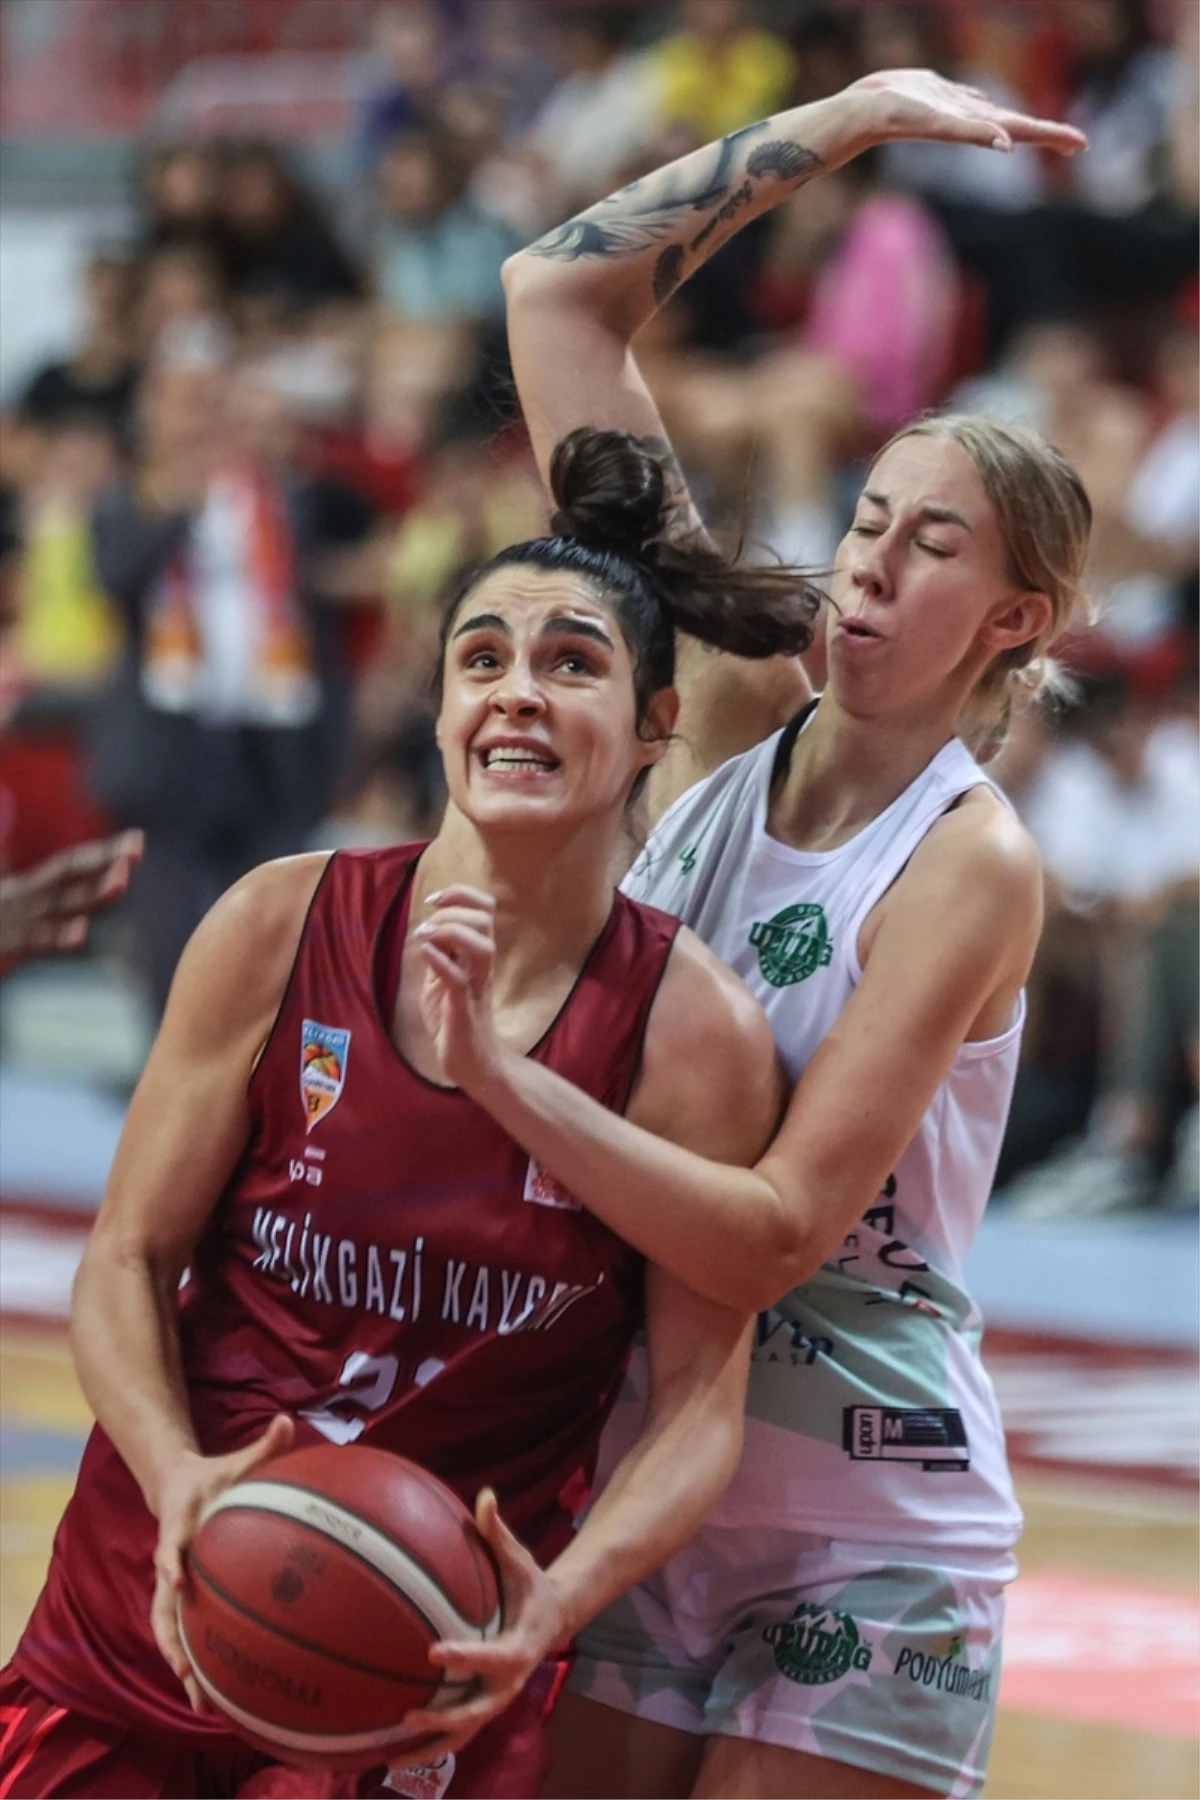 Melikgazi Kayseri Basketbol, Bursa Uludağ Basketbol'u 85-81 yendi